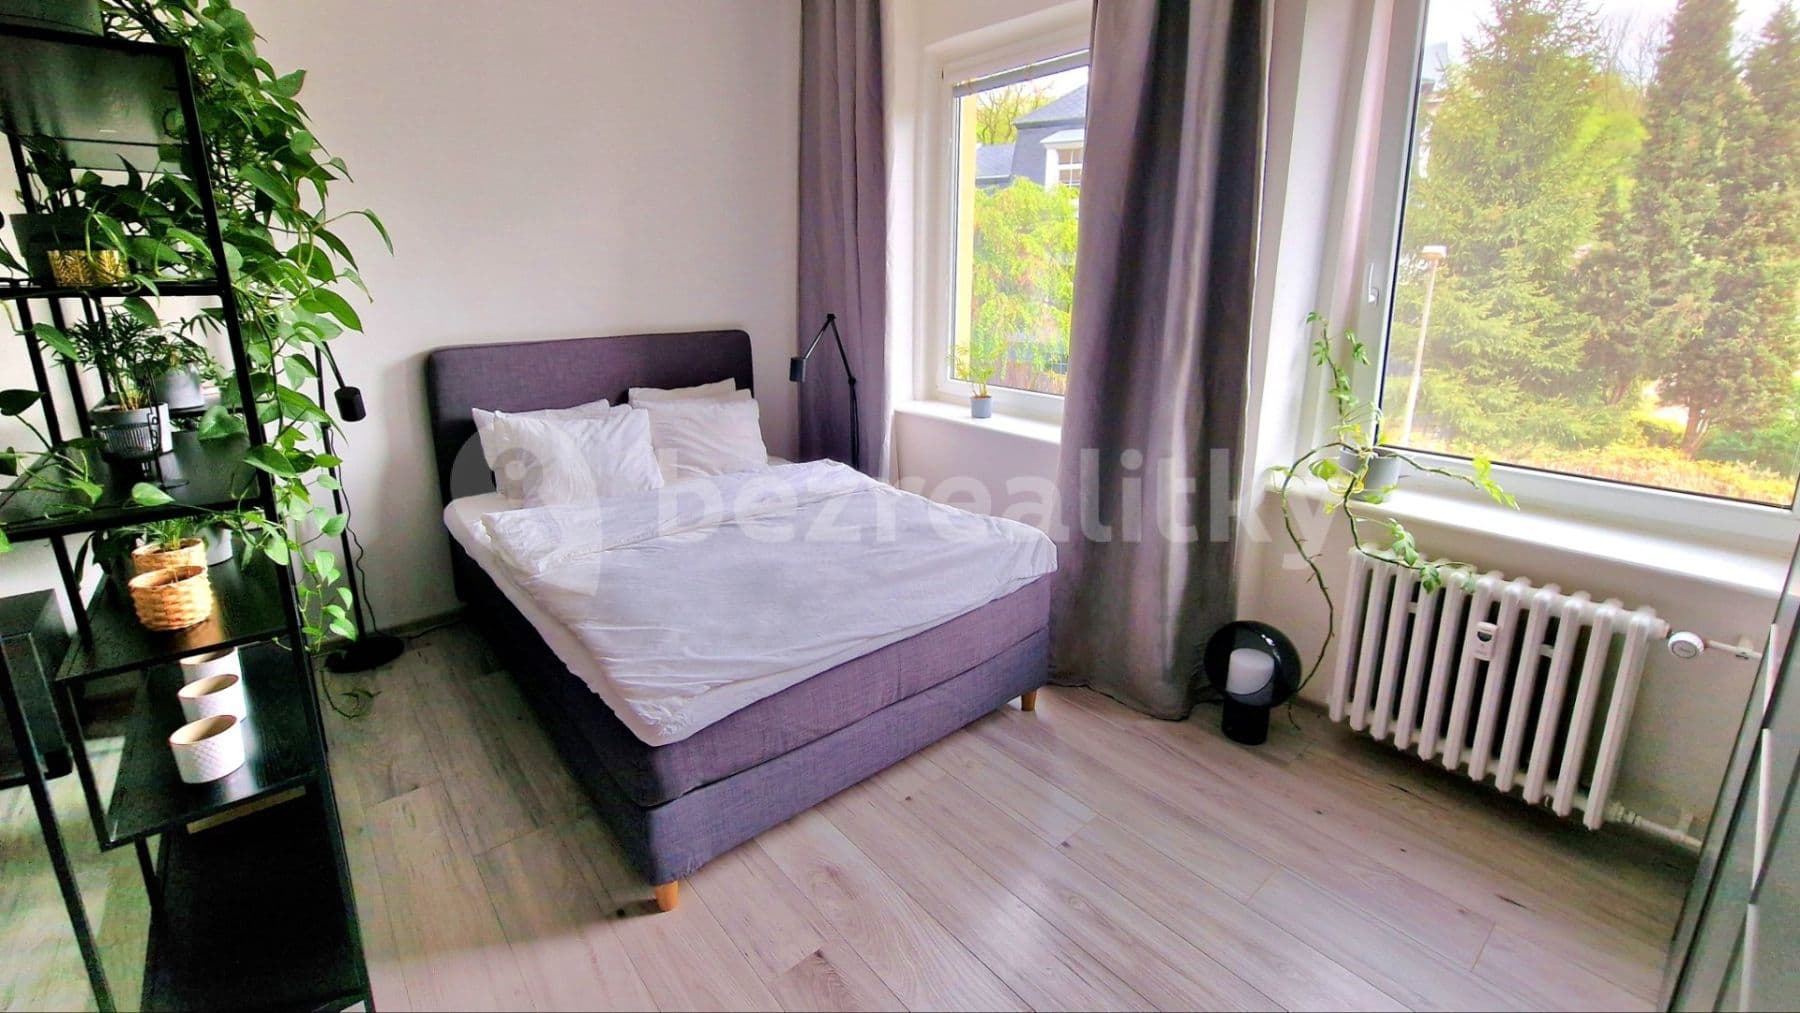 1 bedroom flat for sale, 46 m², Králova výšina, Ústí nad Labem, Ústecký Region